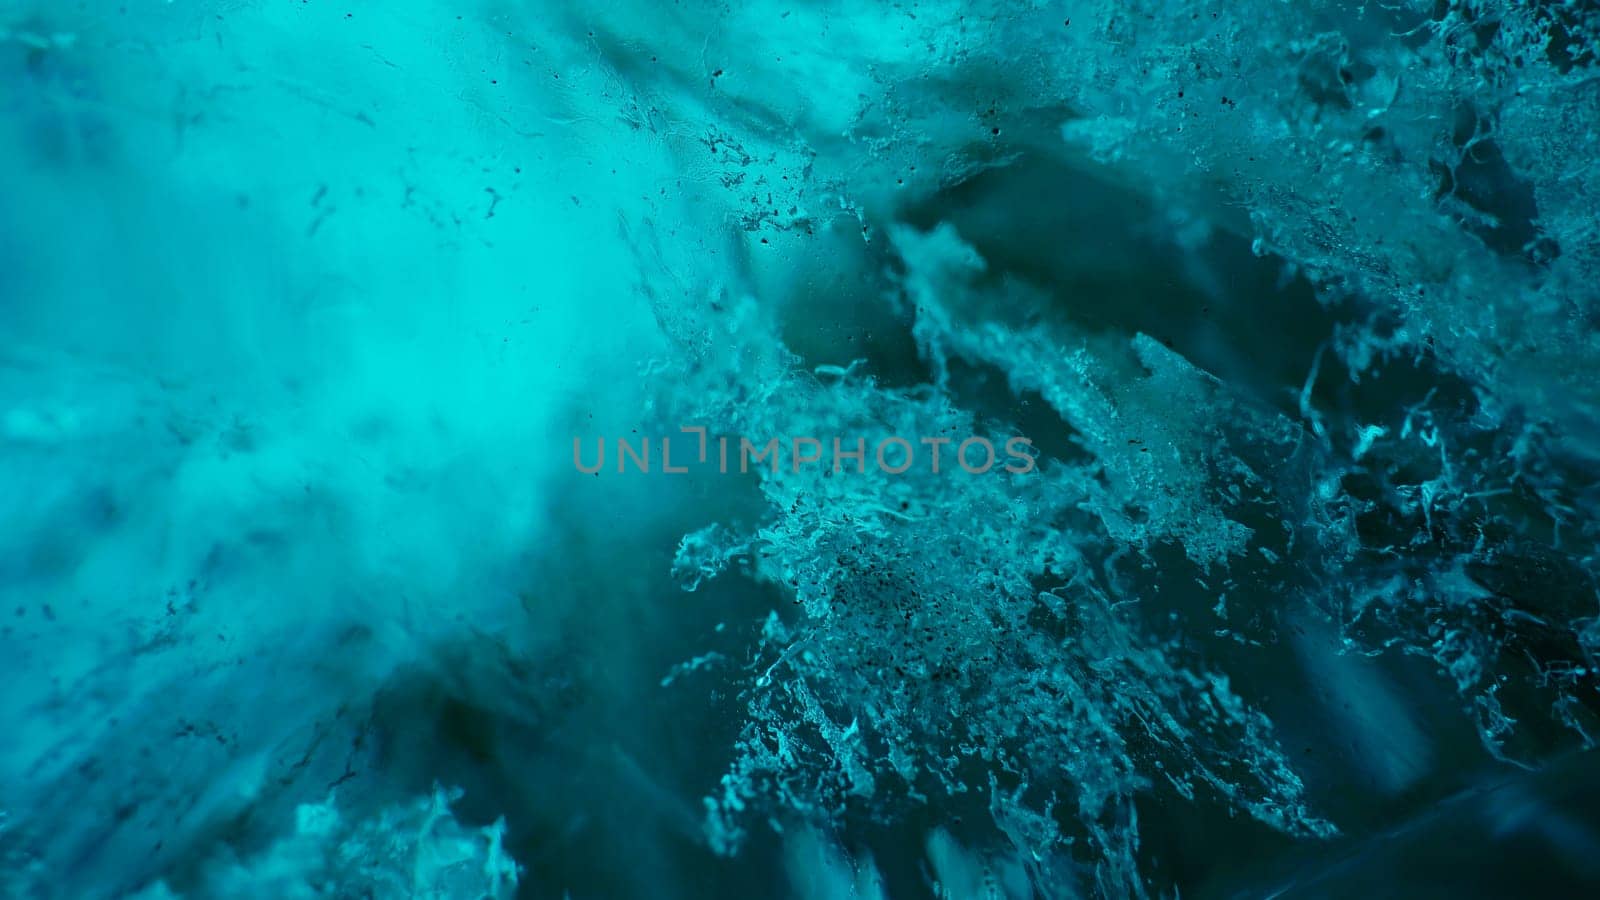 Majestic ice rocks in vatnajokull caves, transparent blue blocks of ice melting after global warming in iceland. Climate change affecting icelandic glaciers and polar nature. Handheld shot.